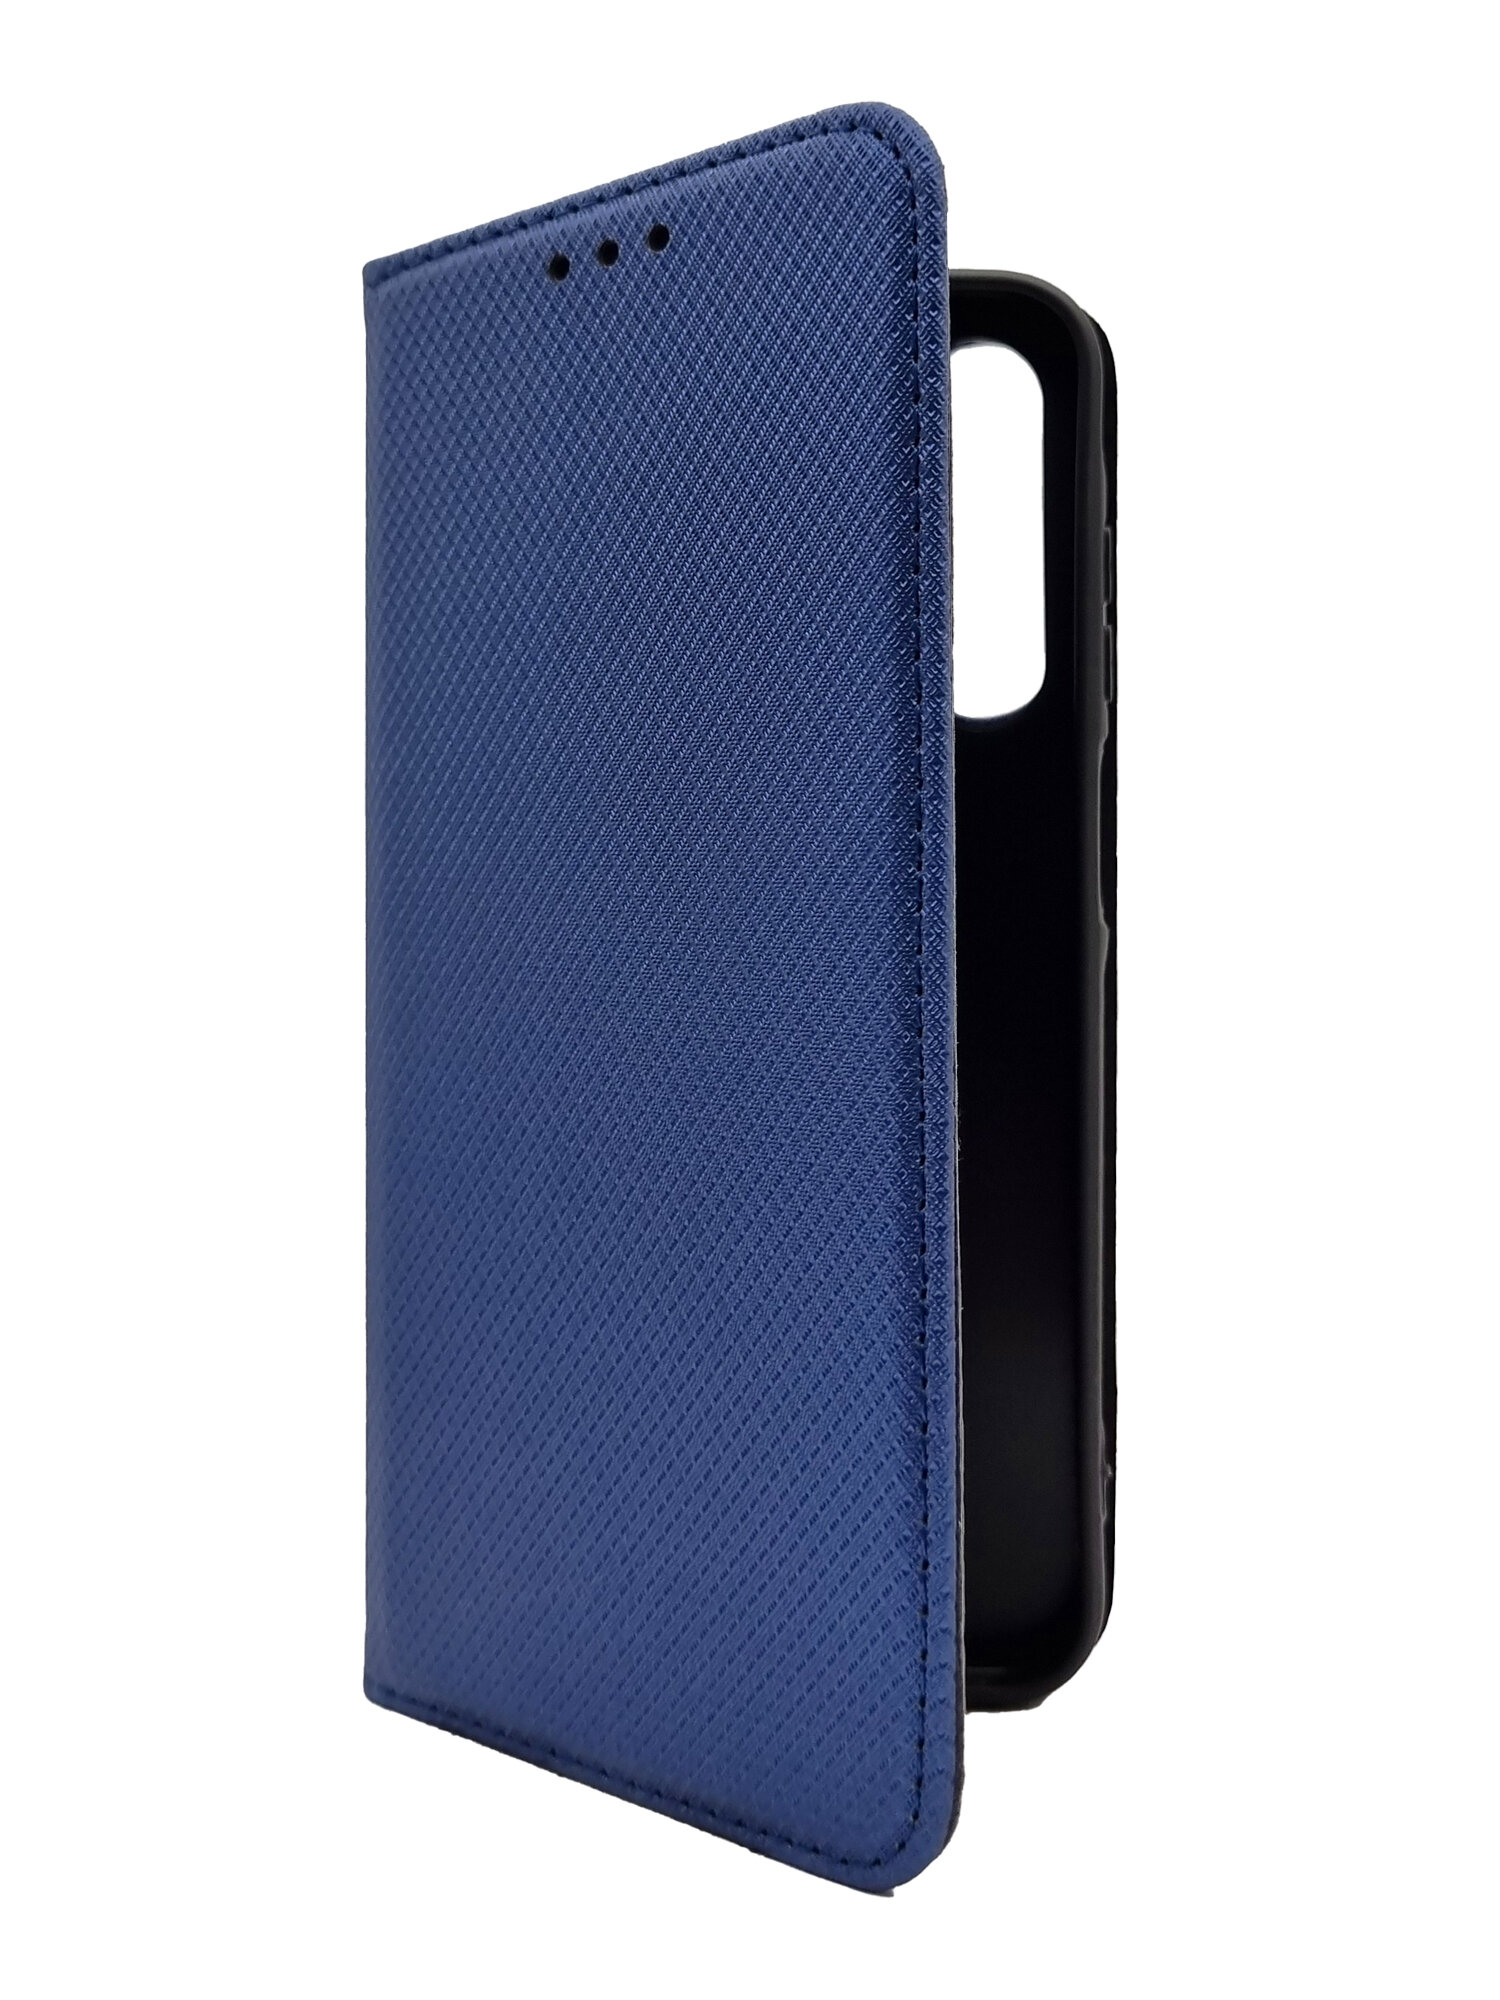 Чехол на Samsung Galaxy A25 (Самсунг Галакси А25) синий книжка плетёнка с функцией подставки с отделением для карт и магнитами Fold Case, Miuko